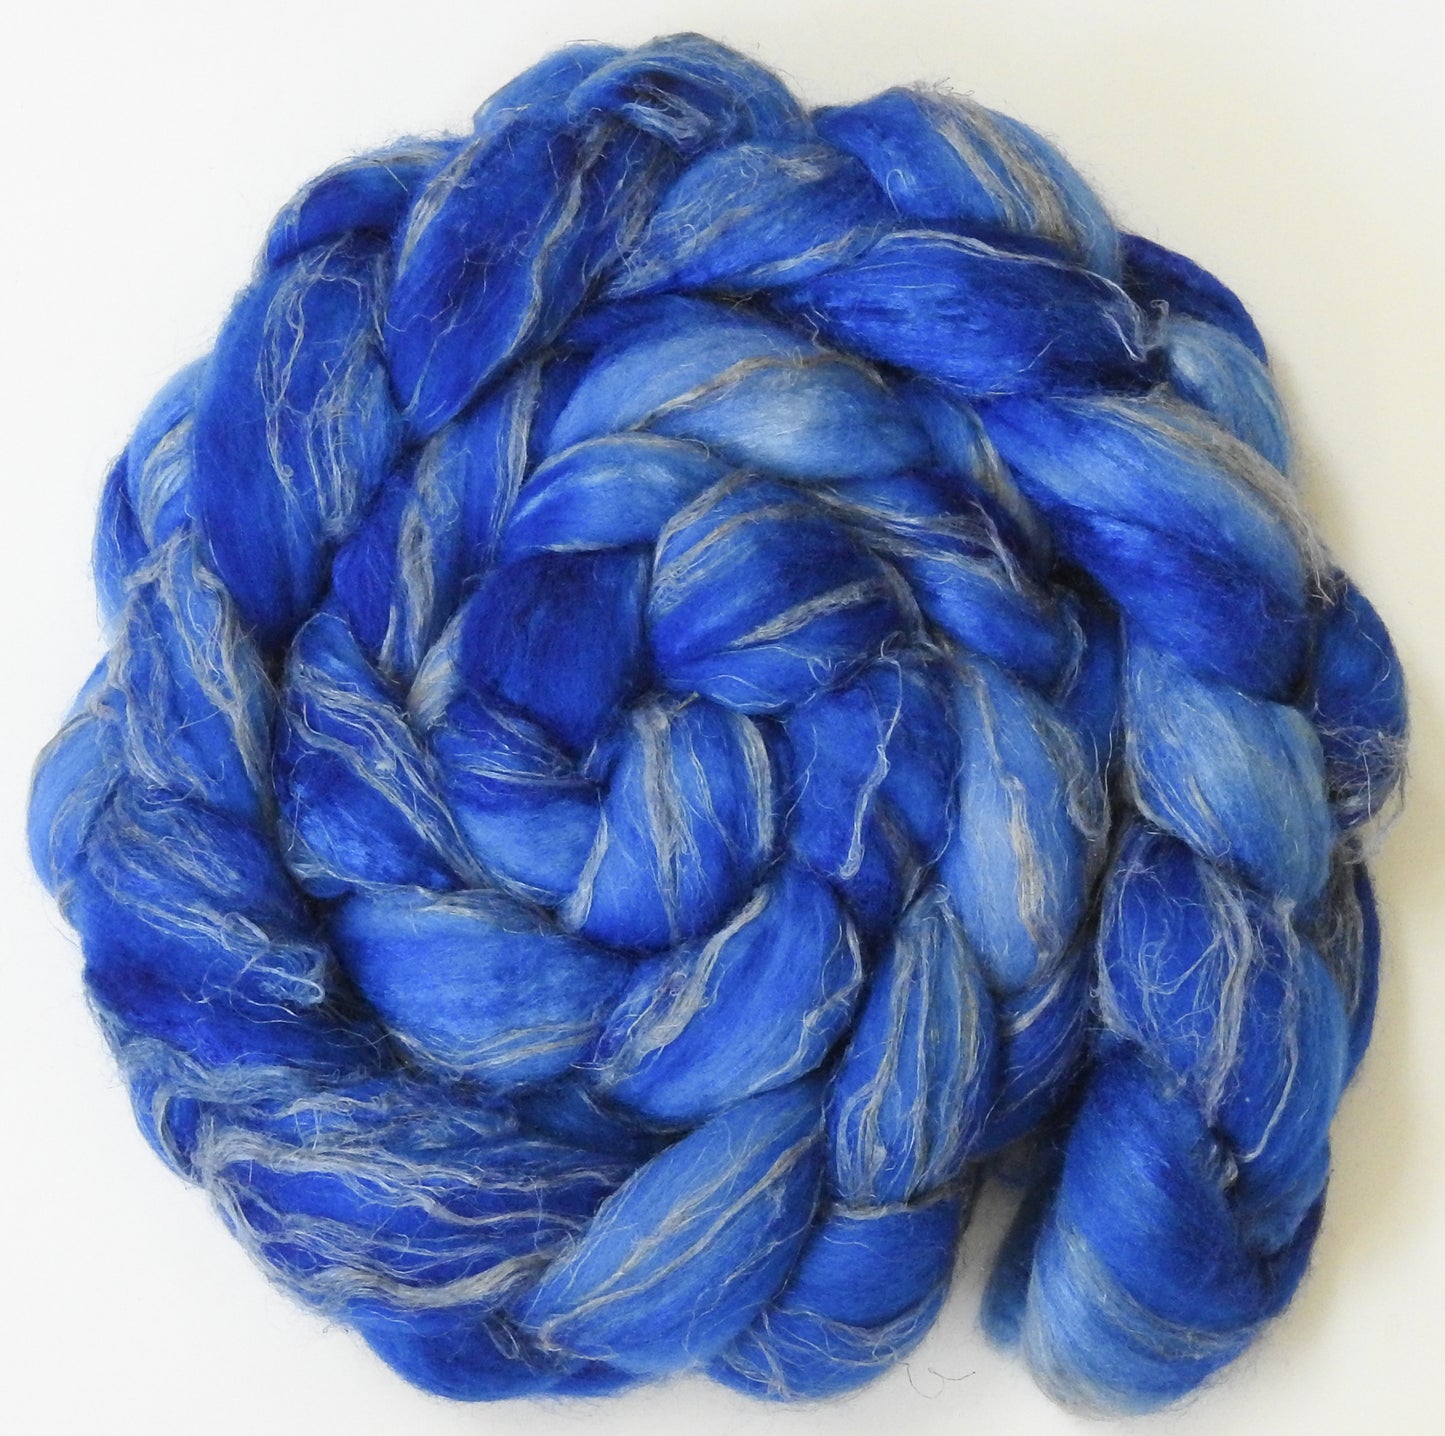 Blue Ribbon (5.6 oz) - Merino/ Tussah Silk/ Natural Flax (50/25/25)